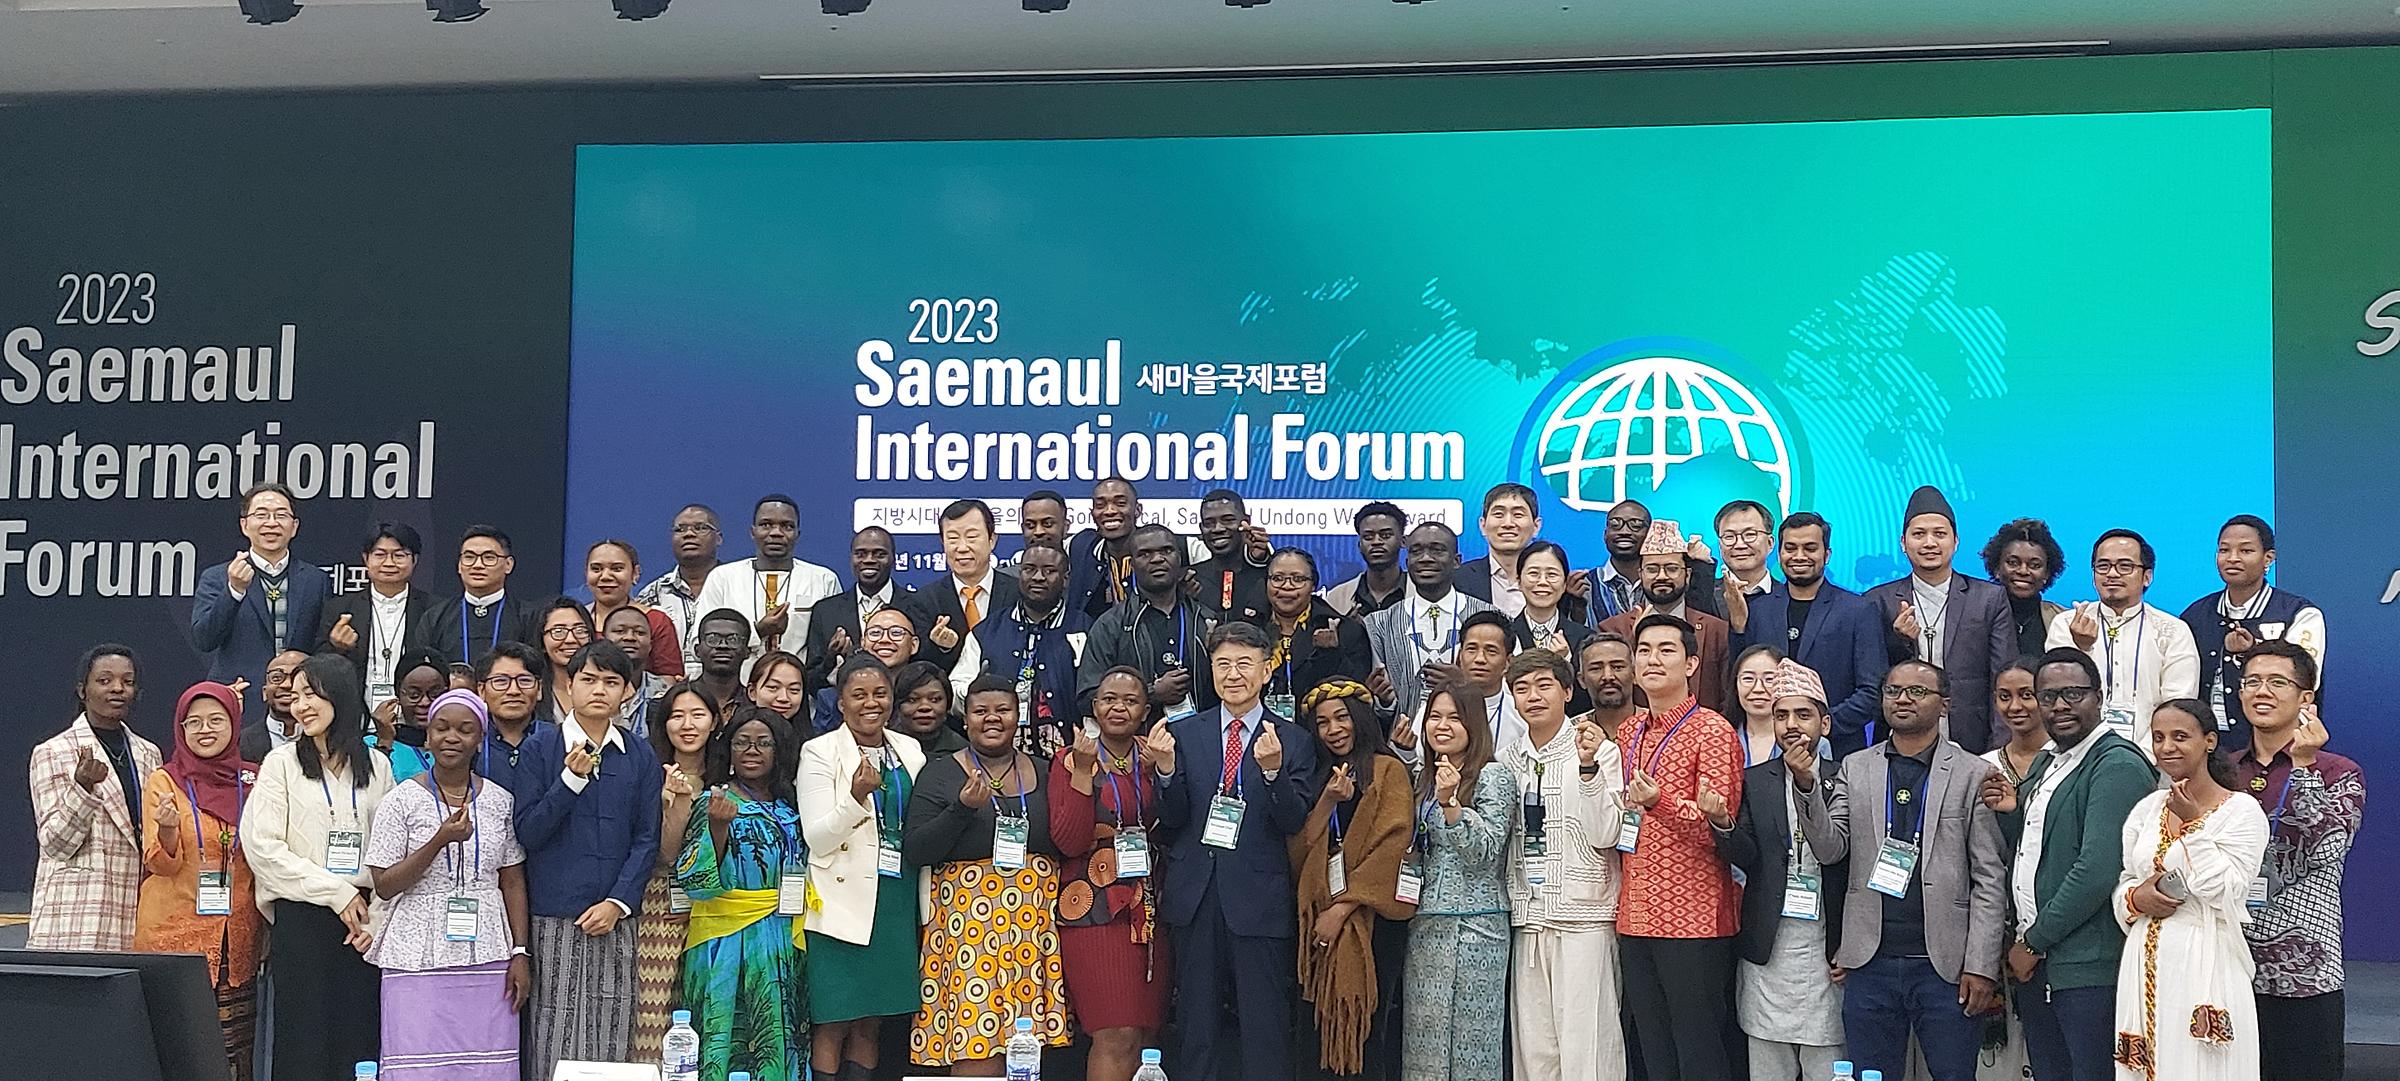 2023 Saemaul International Forum